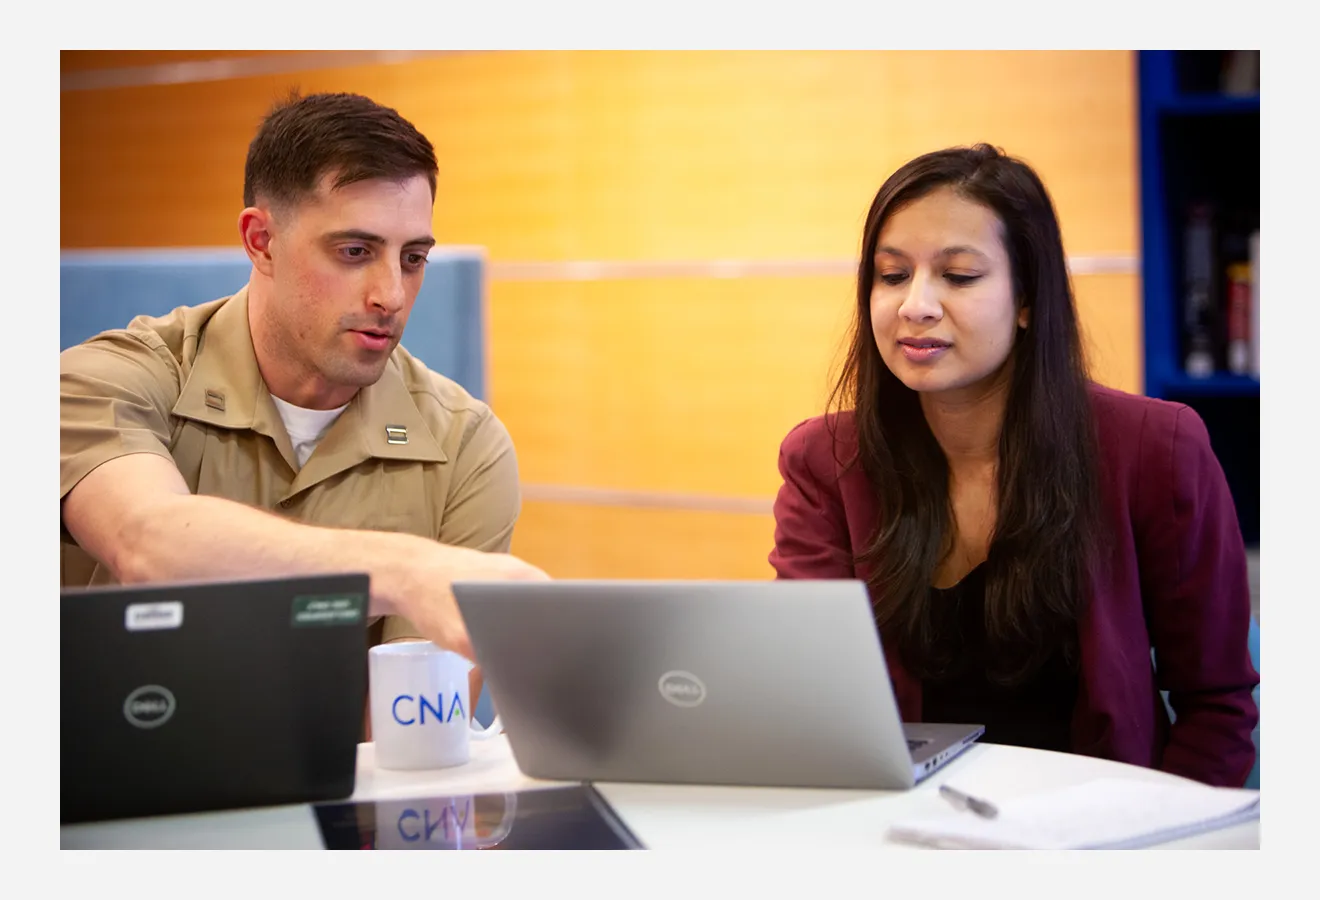 Marine and CNA analyst on laptops